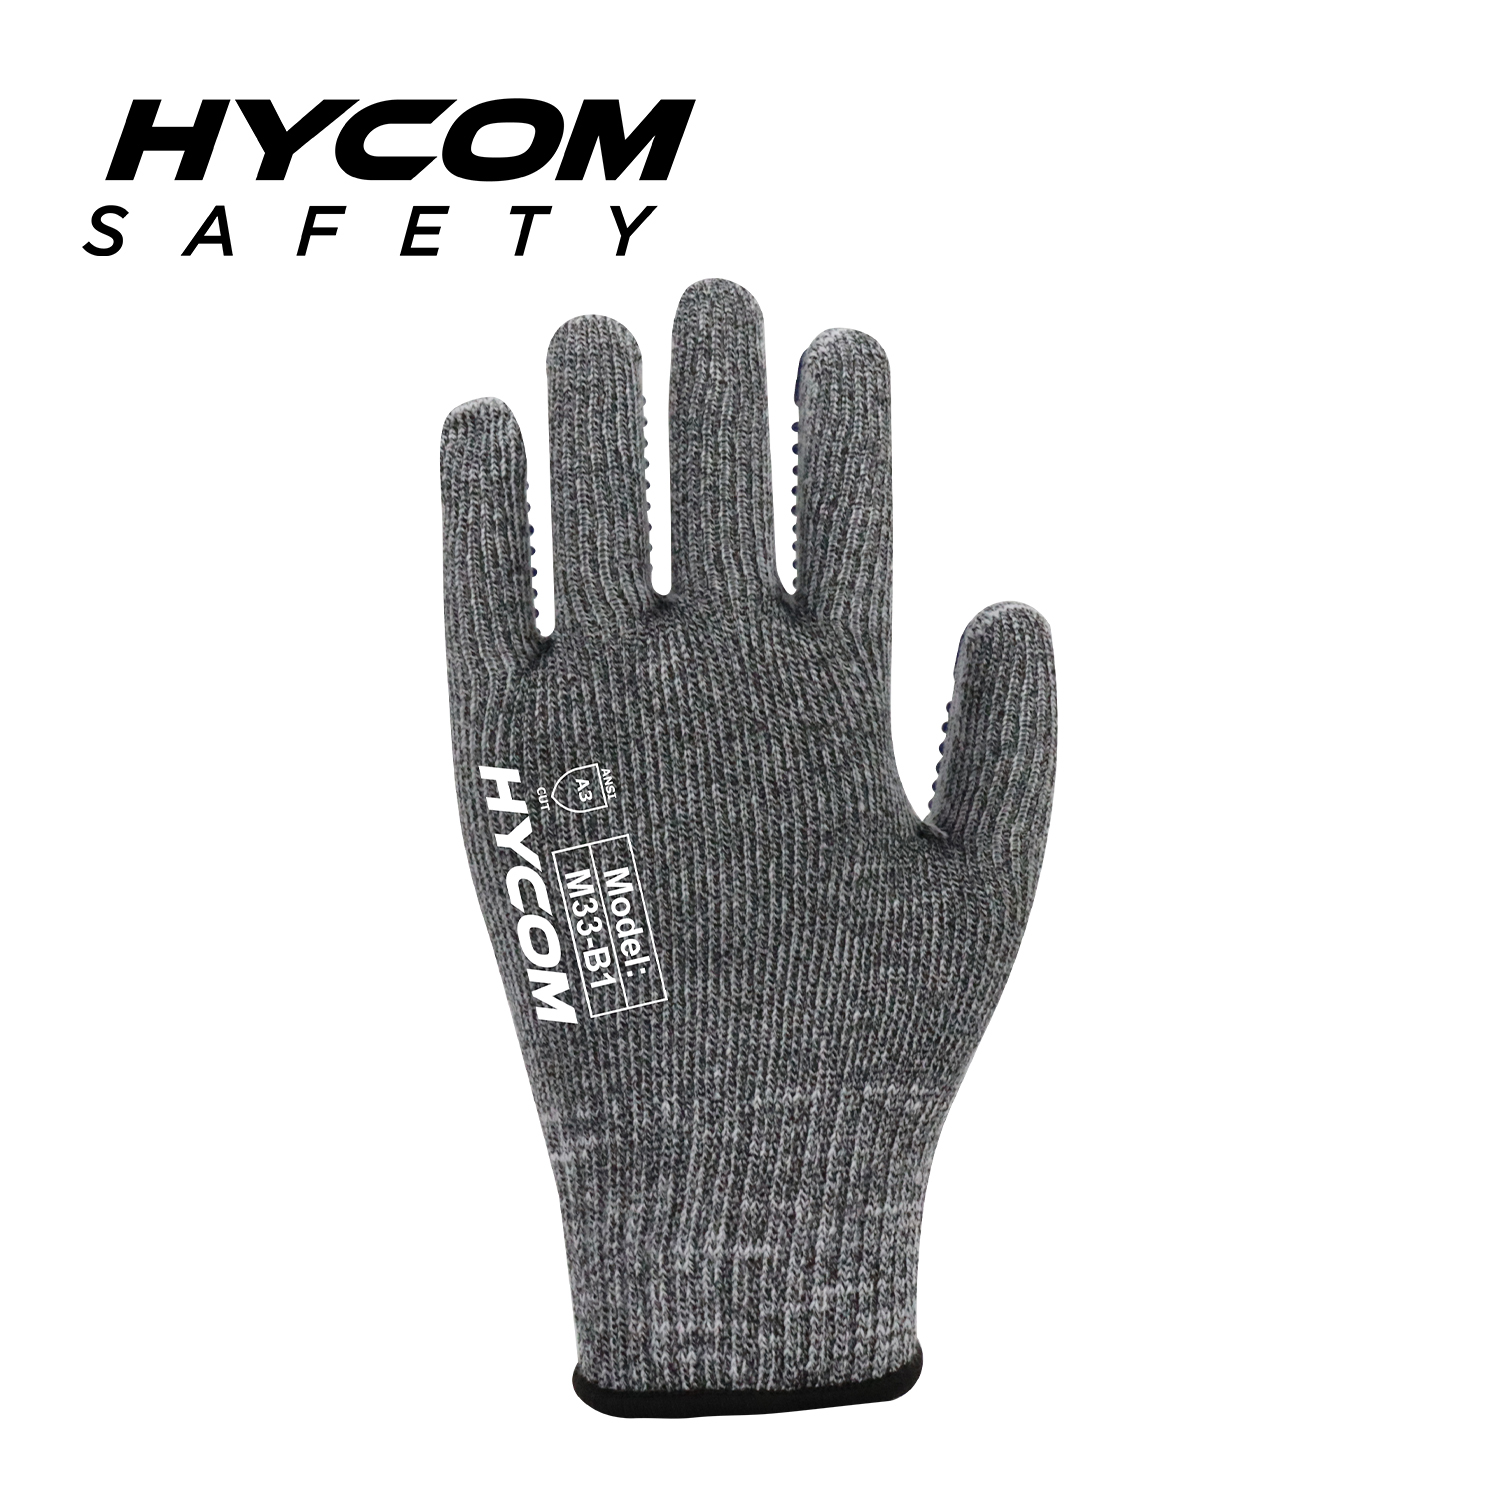 HYCOM Atemgeschnittener 10G ANSI 3 schnittfester Handschuh mit gepunkteter PVC-Beschichtung an der Handfläche